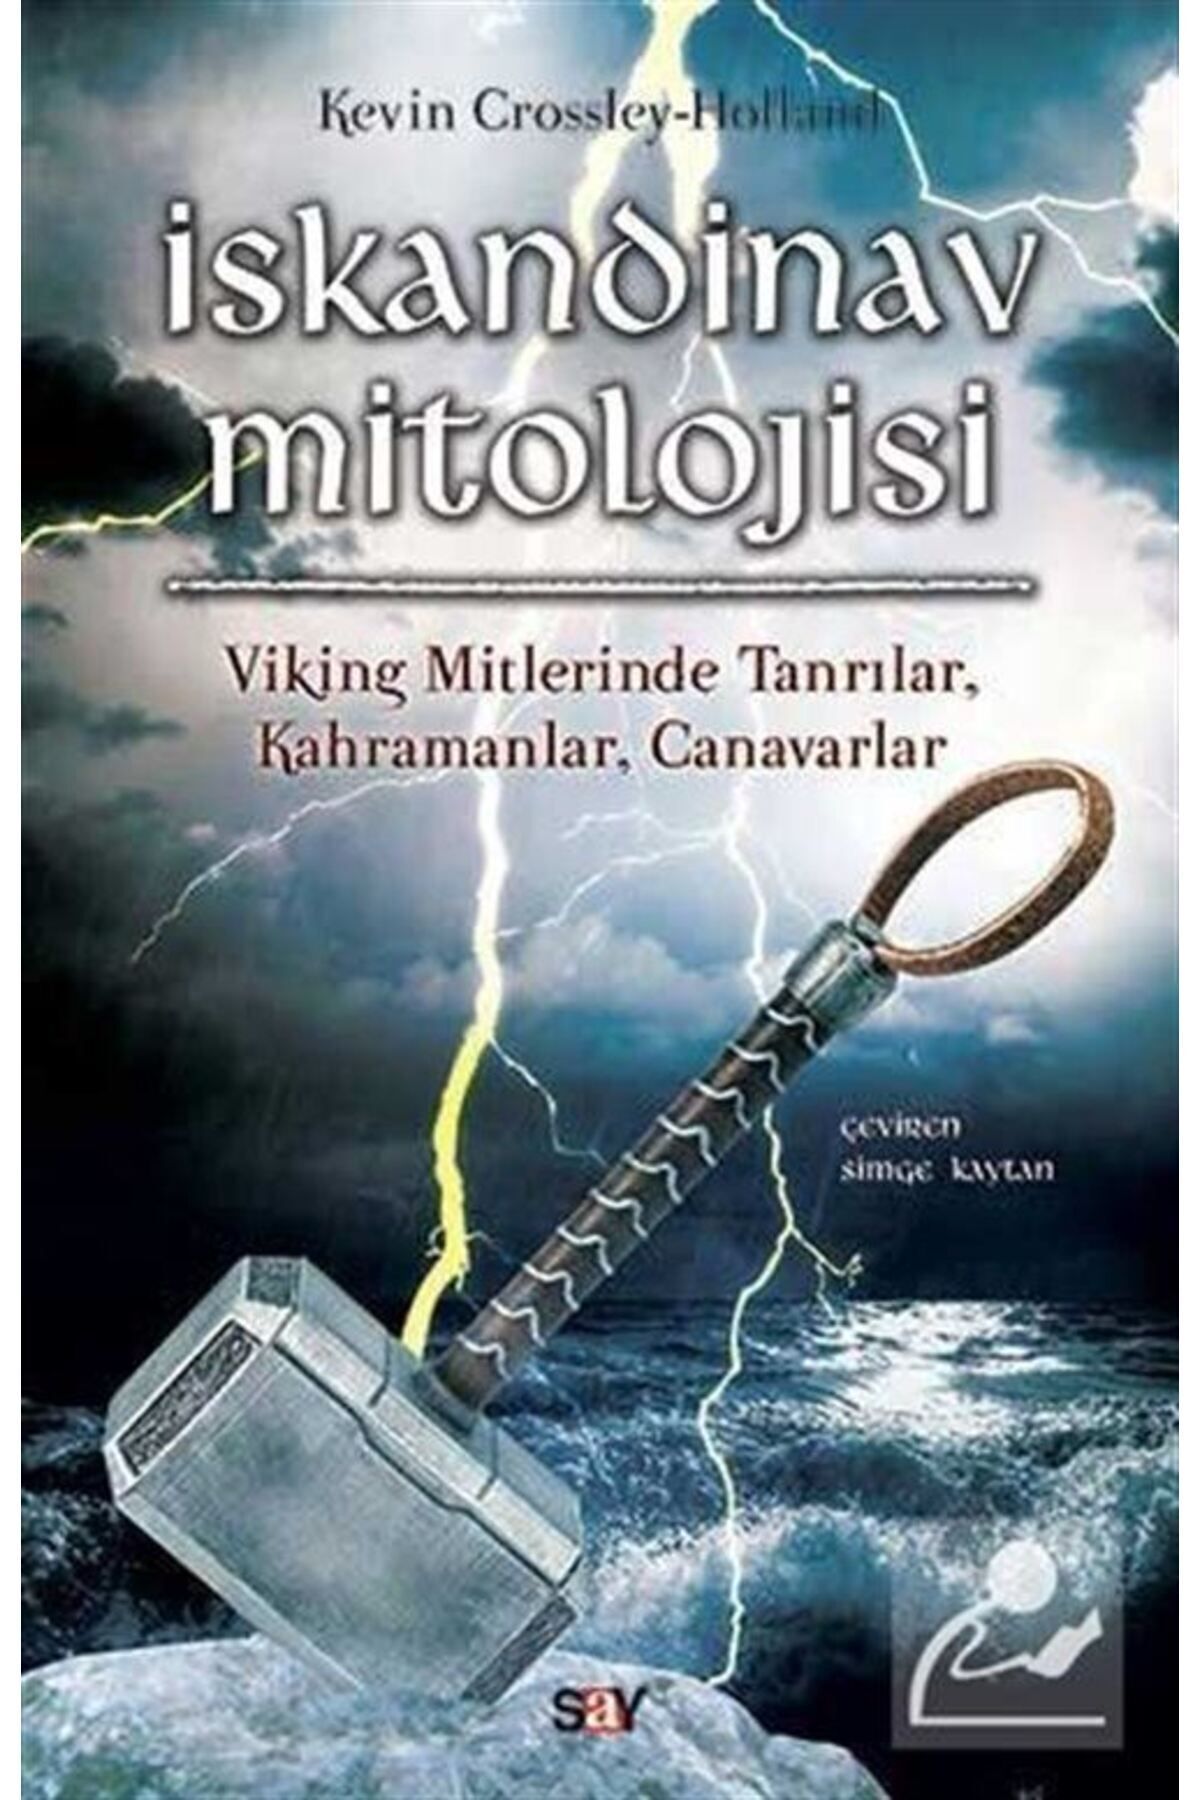 Say Yayınları I?skandinav Mitolojisi & Viking, Mitlerinde Tanrılar, Kahramanlar, Canavarlar